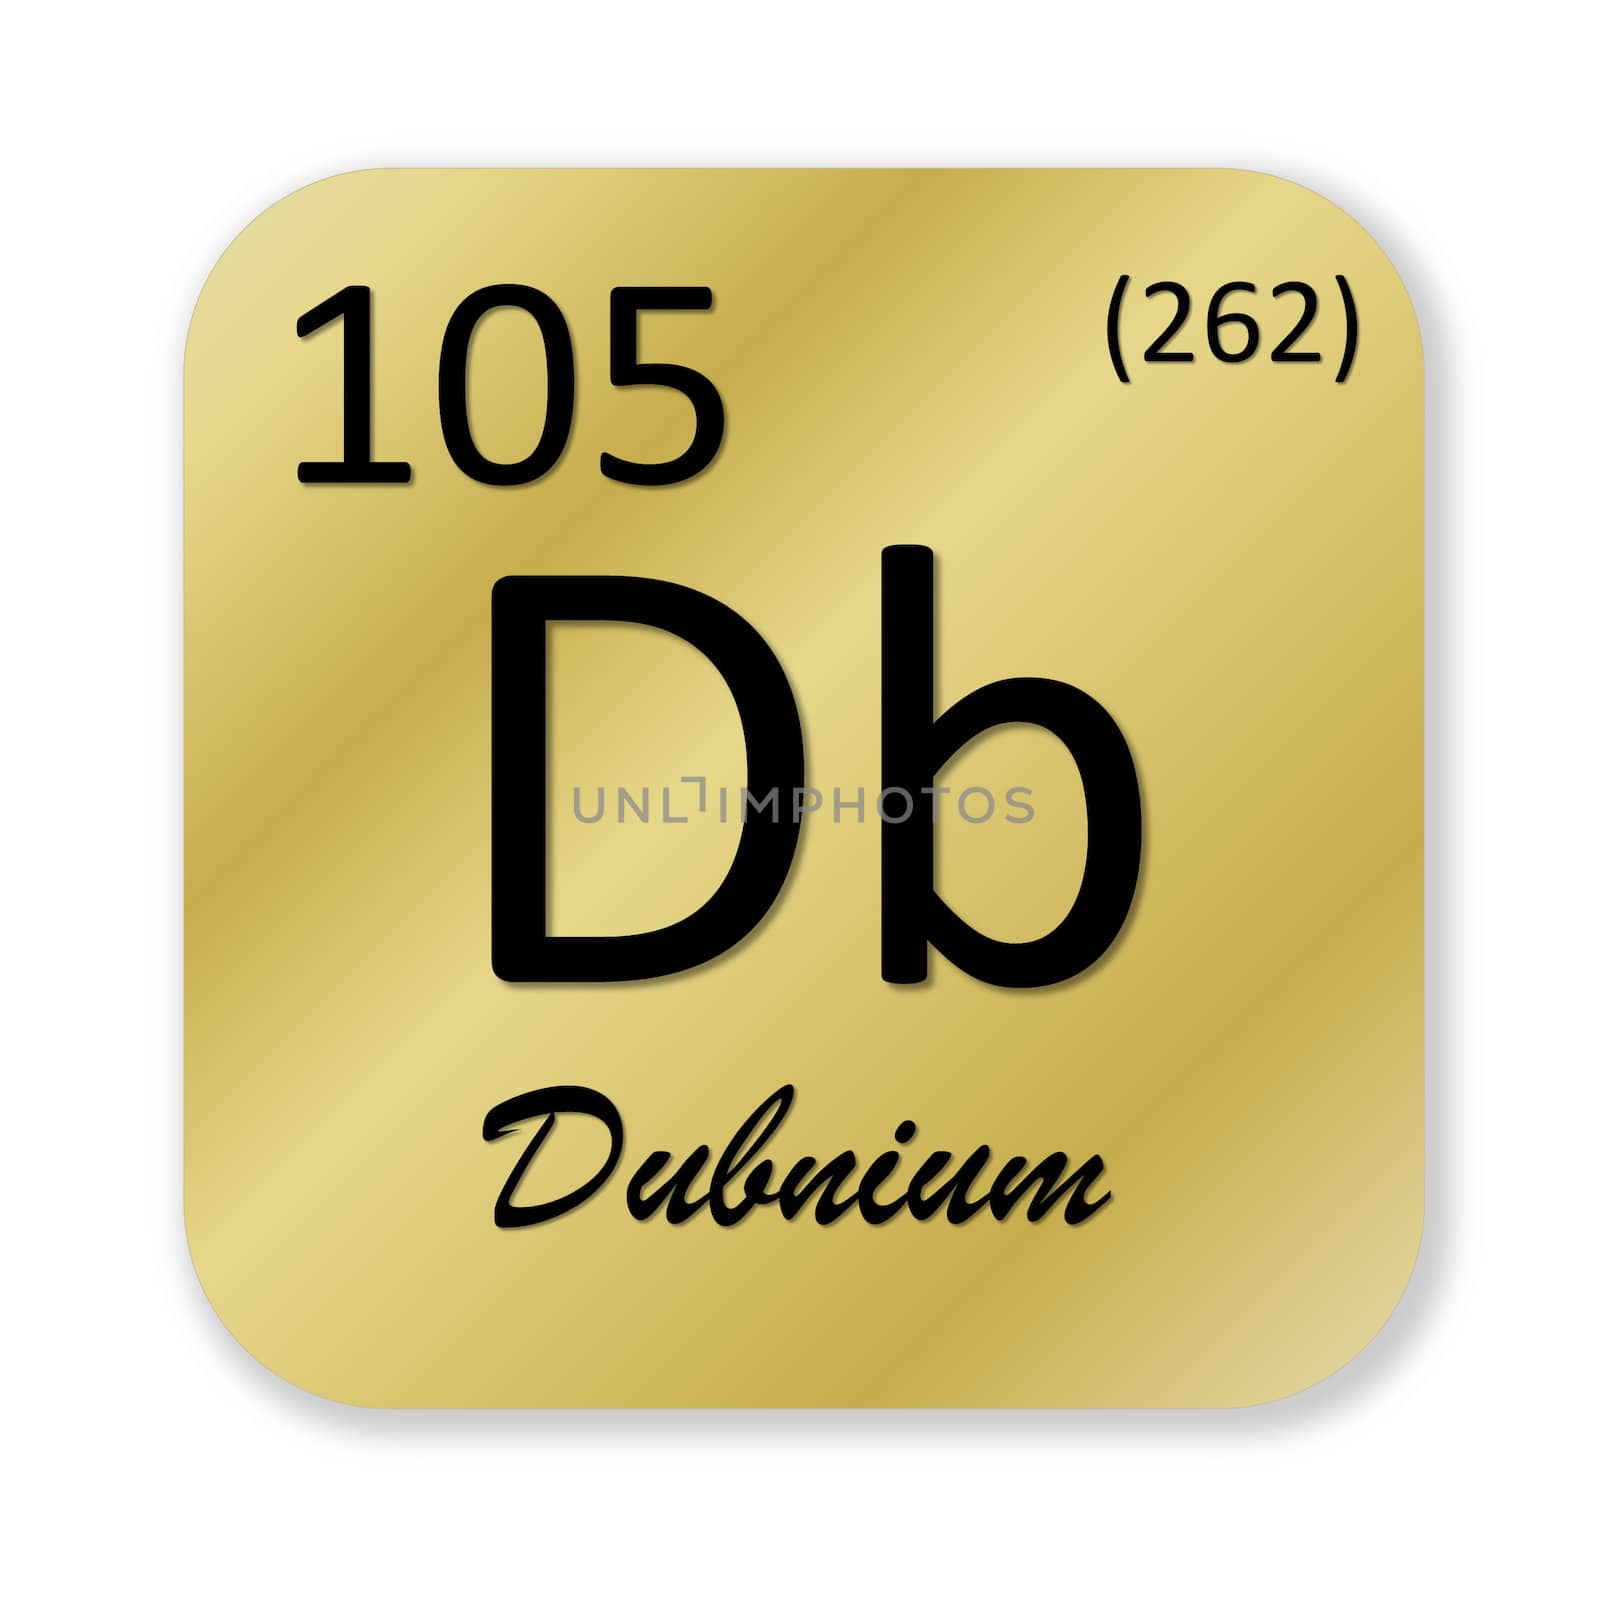 Dubnium element by Elenaphotos21